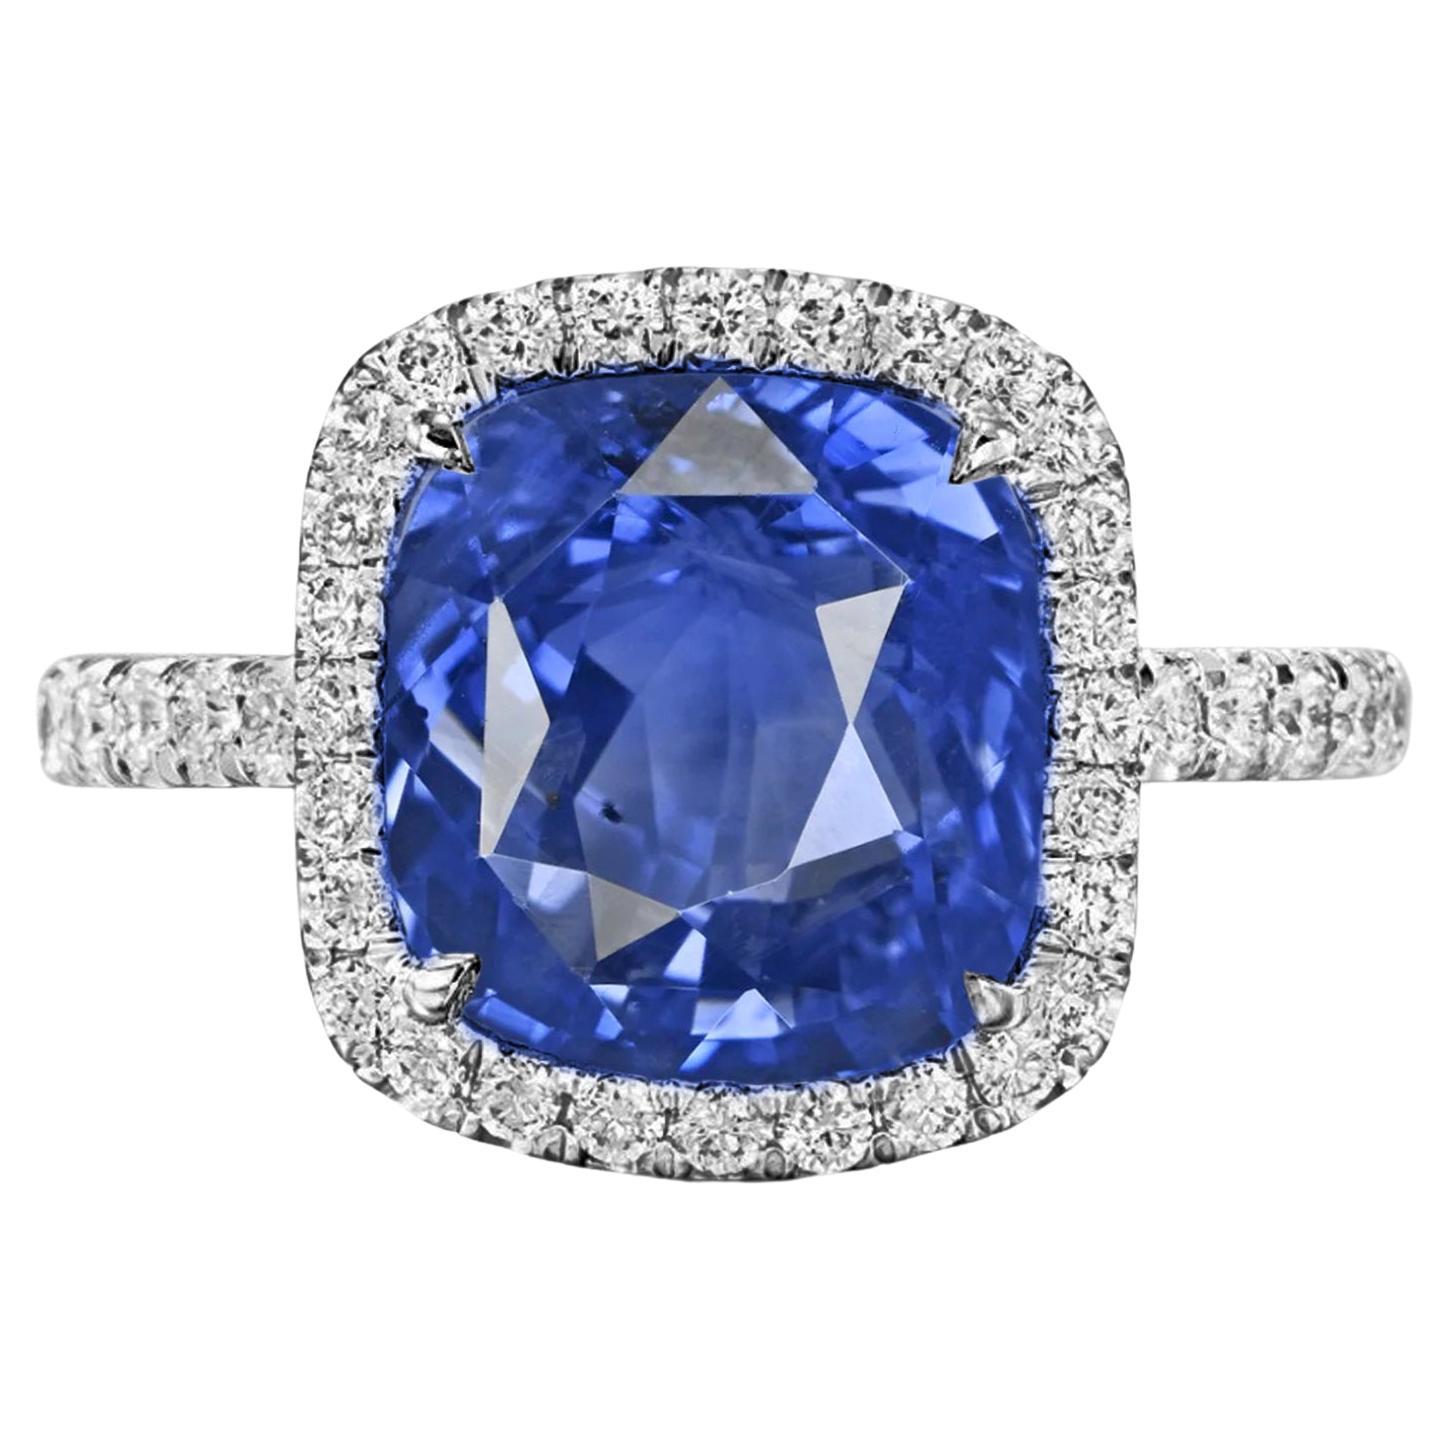 SSEF Switzerland Unheated Untreated 7 Carat Ceylon Blue Sapphire Ring